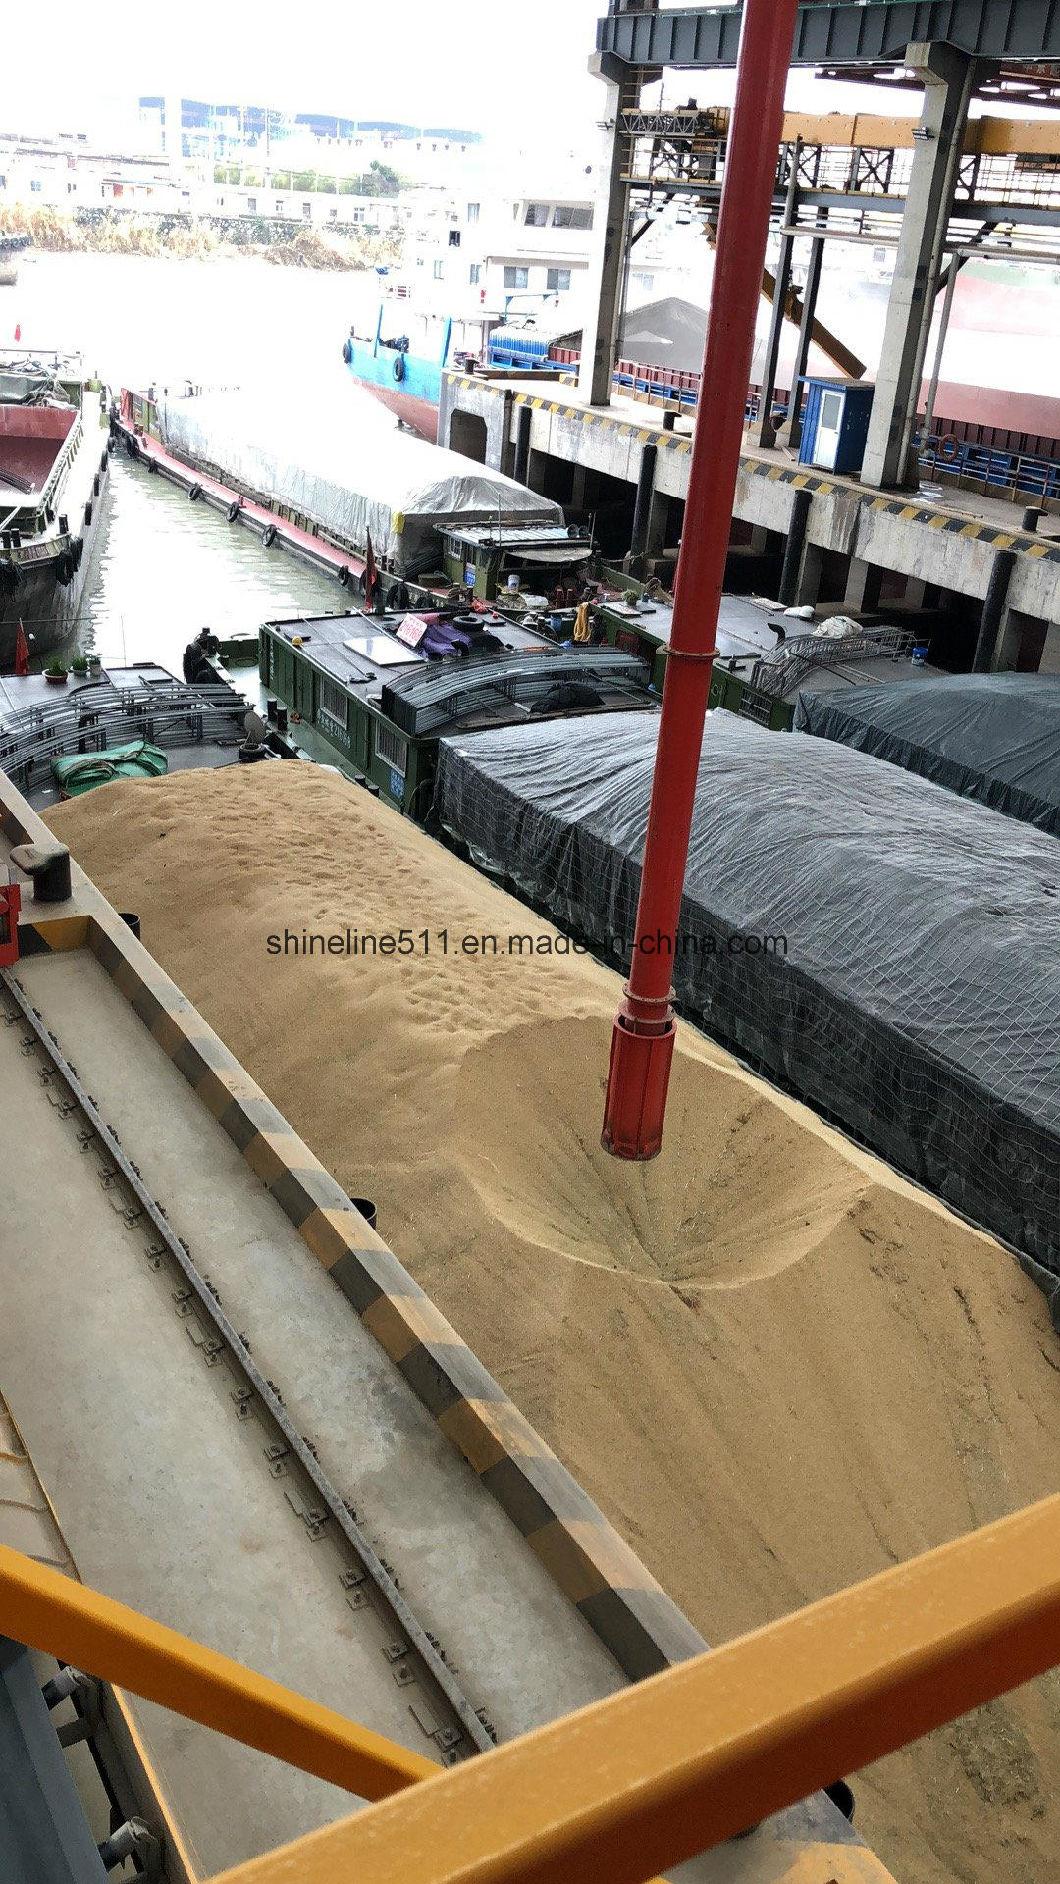 China Top Quality Grain Unloader Manufacturer Supply Series Grain Unloader Capacity Arrive 50-100tons Per Hour